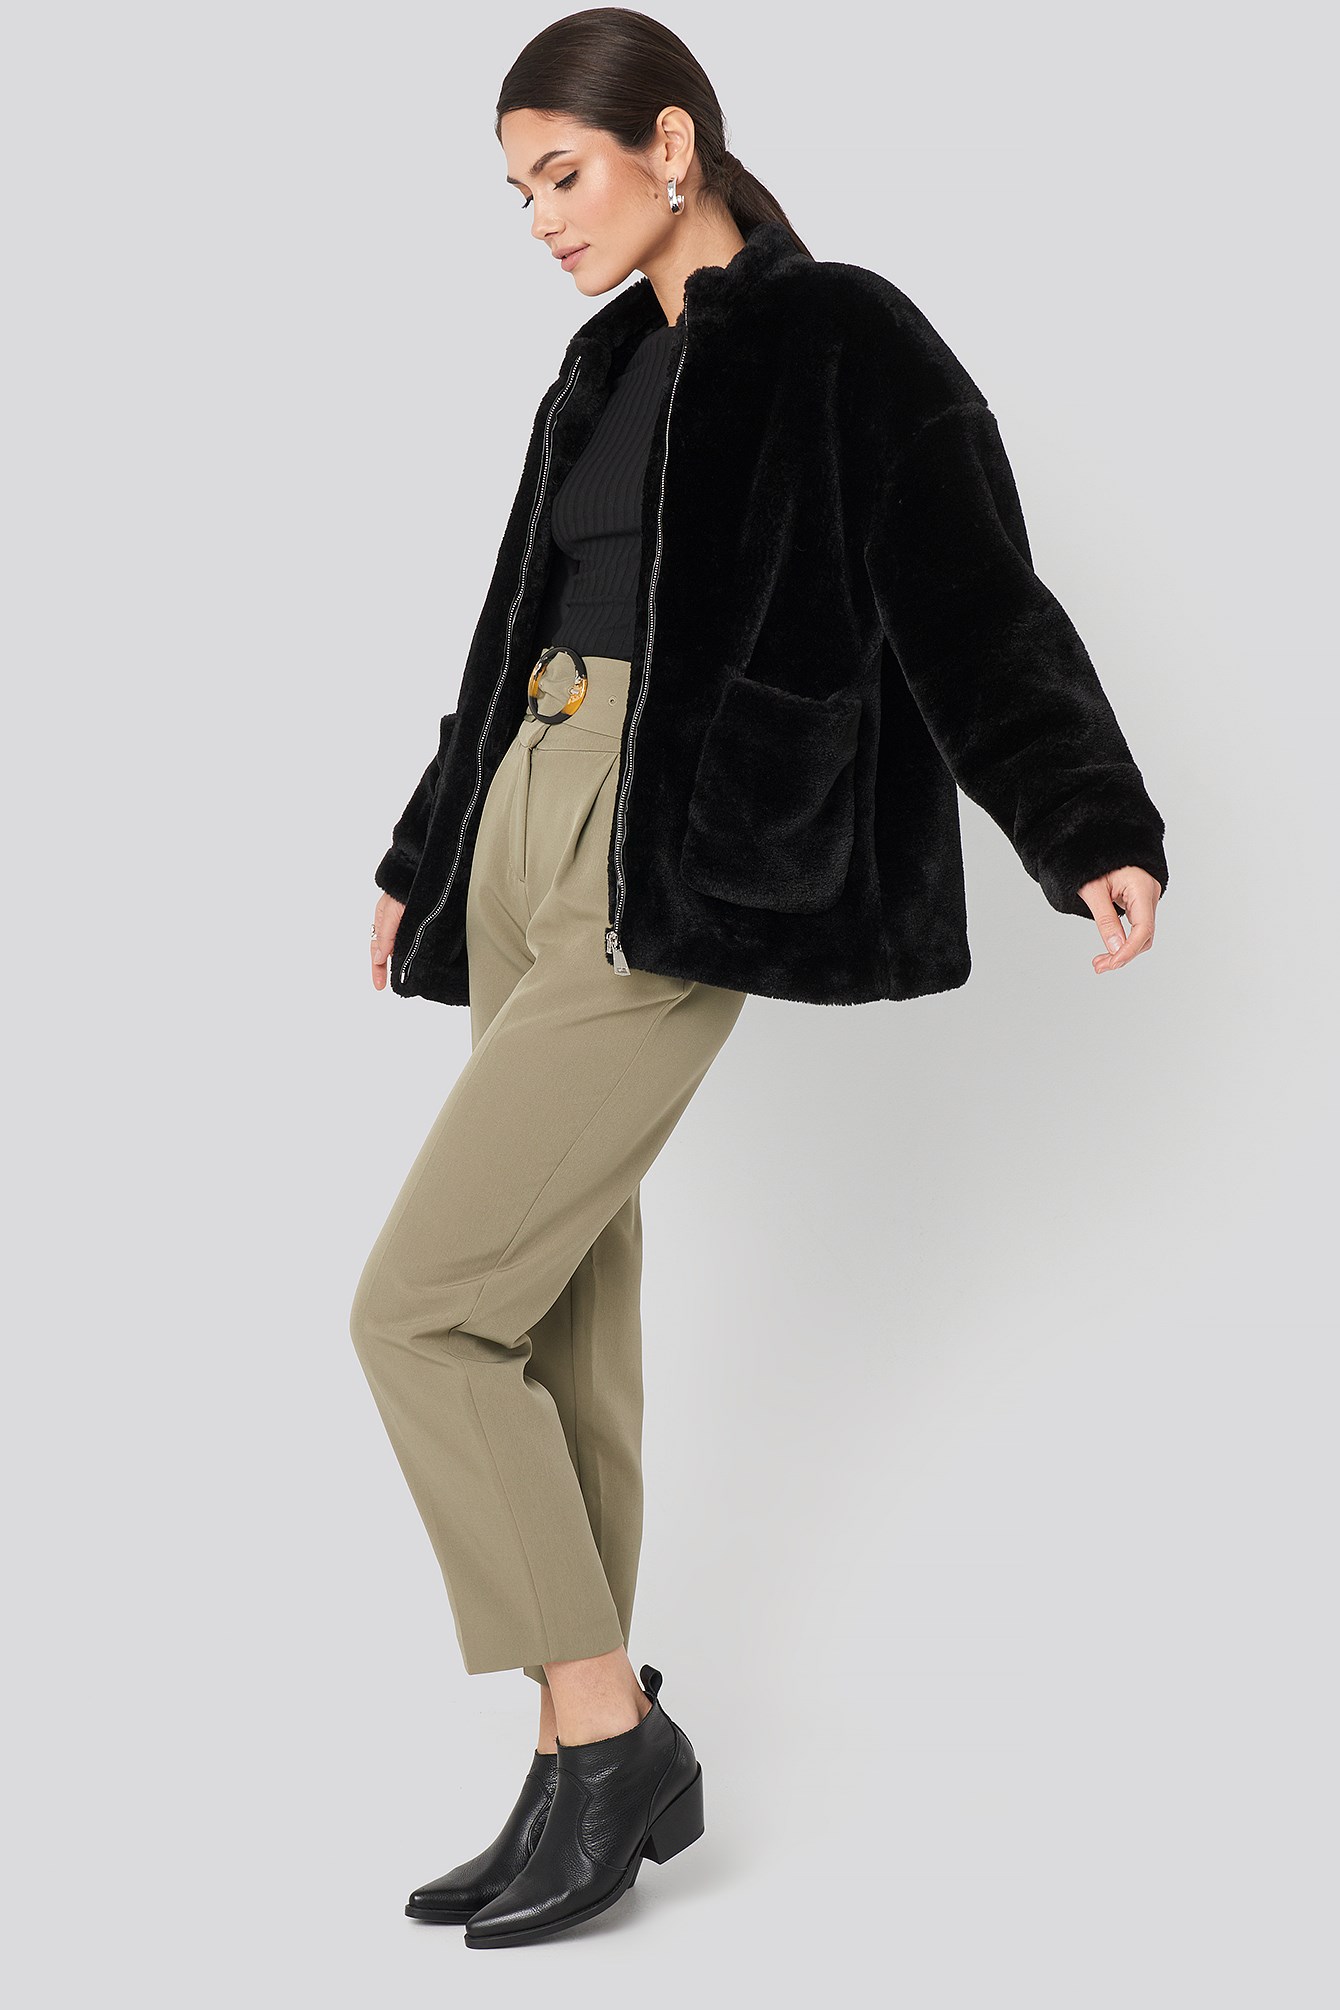 Short Front Pocket Faux Fur Jacket Black Outfit.